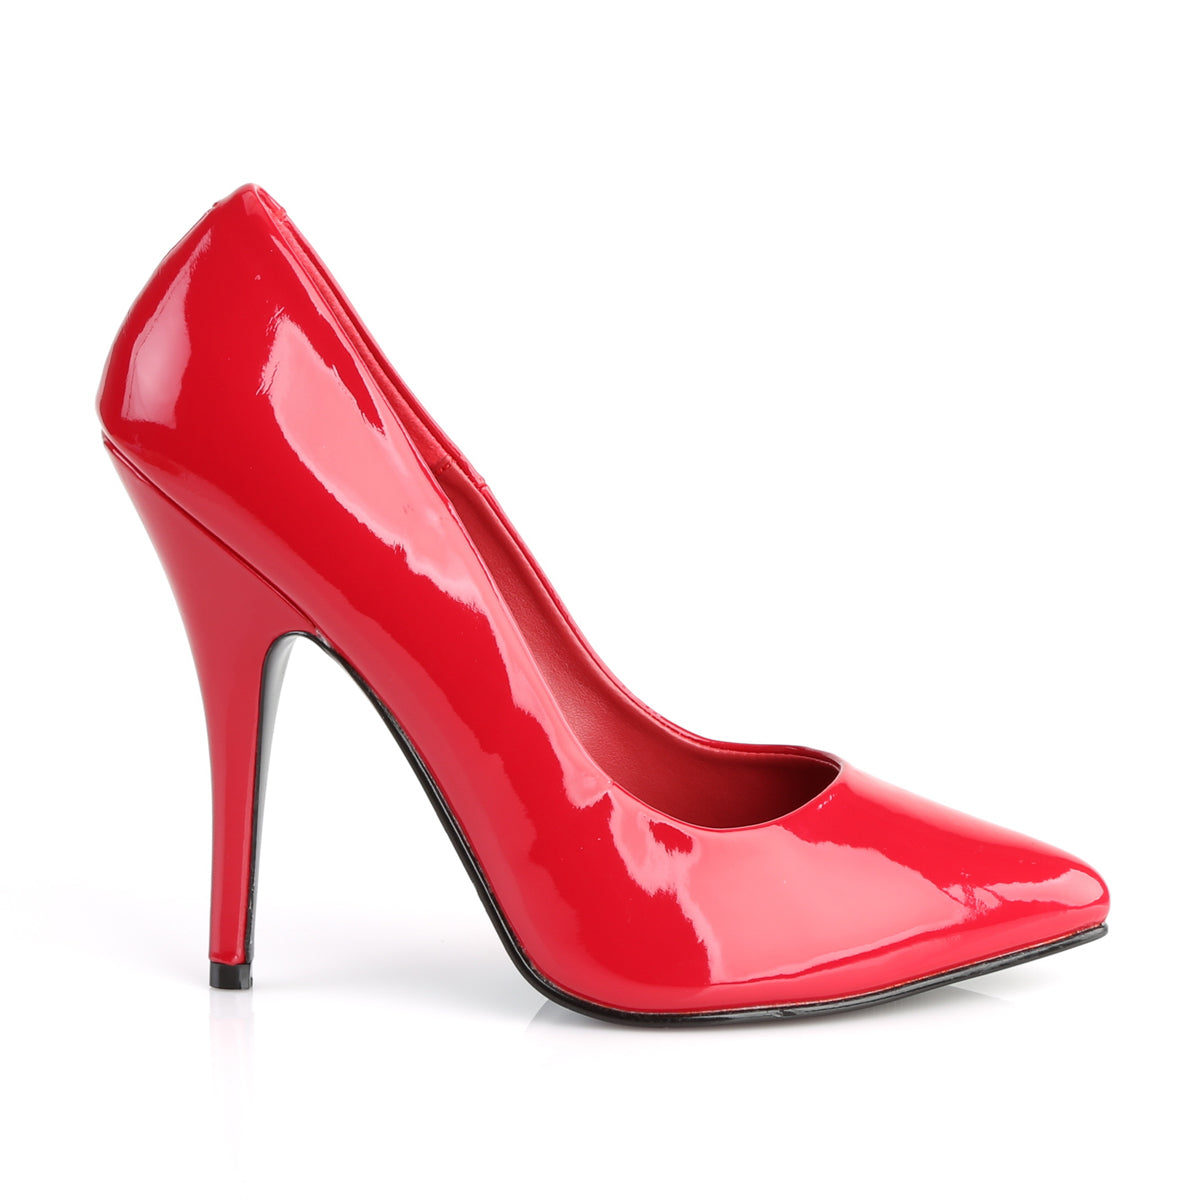 5 Inch Red Heels 